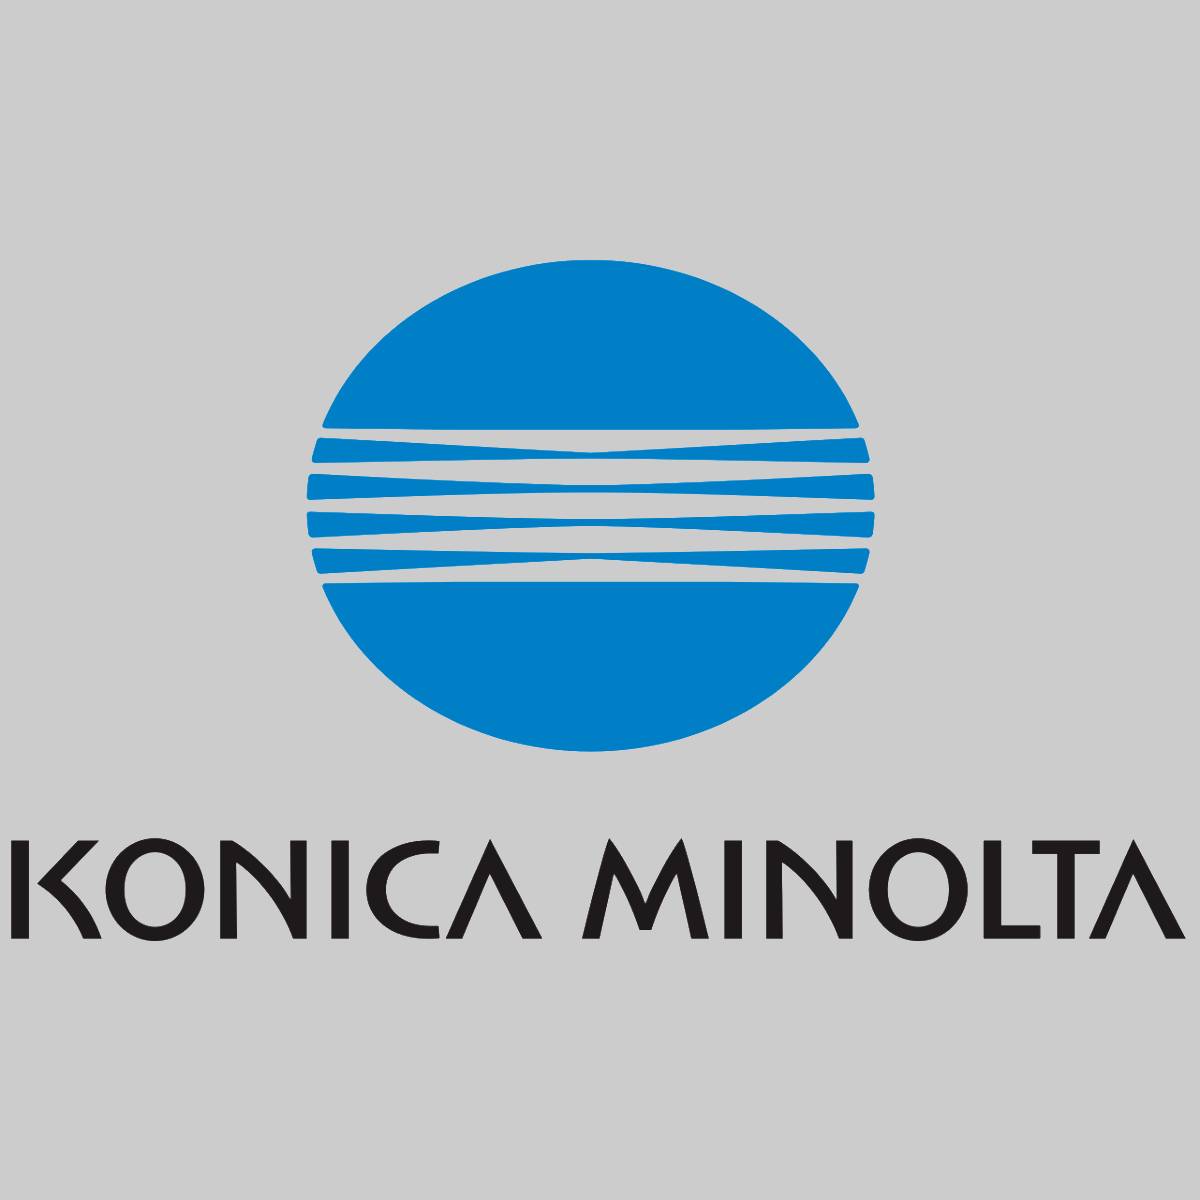 "Original Konica Minolta TNP60 Toner Black AAE3050 for Bizhub 3622 MFP NEW OVP